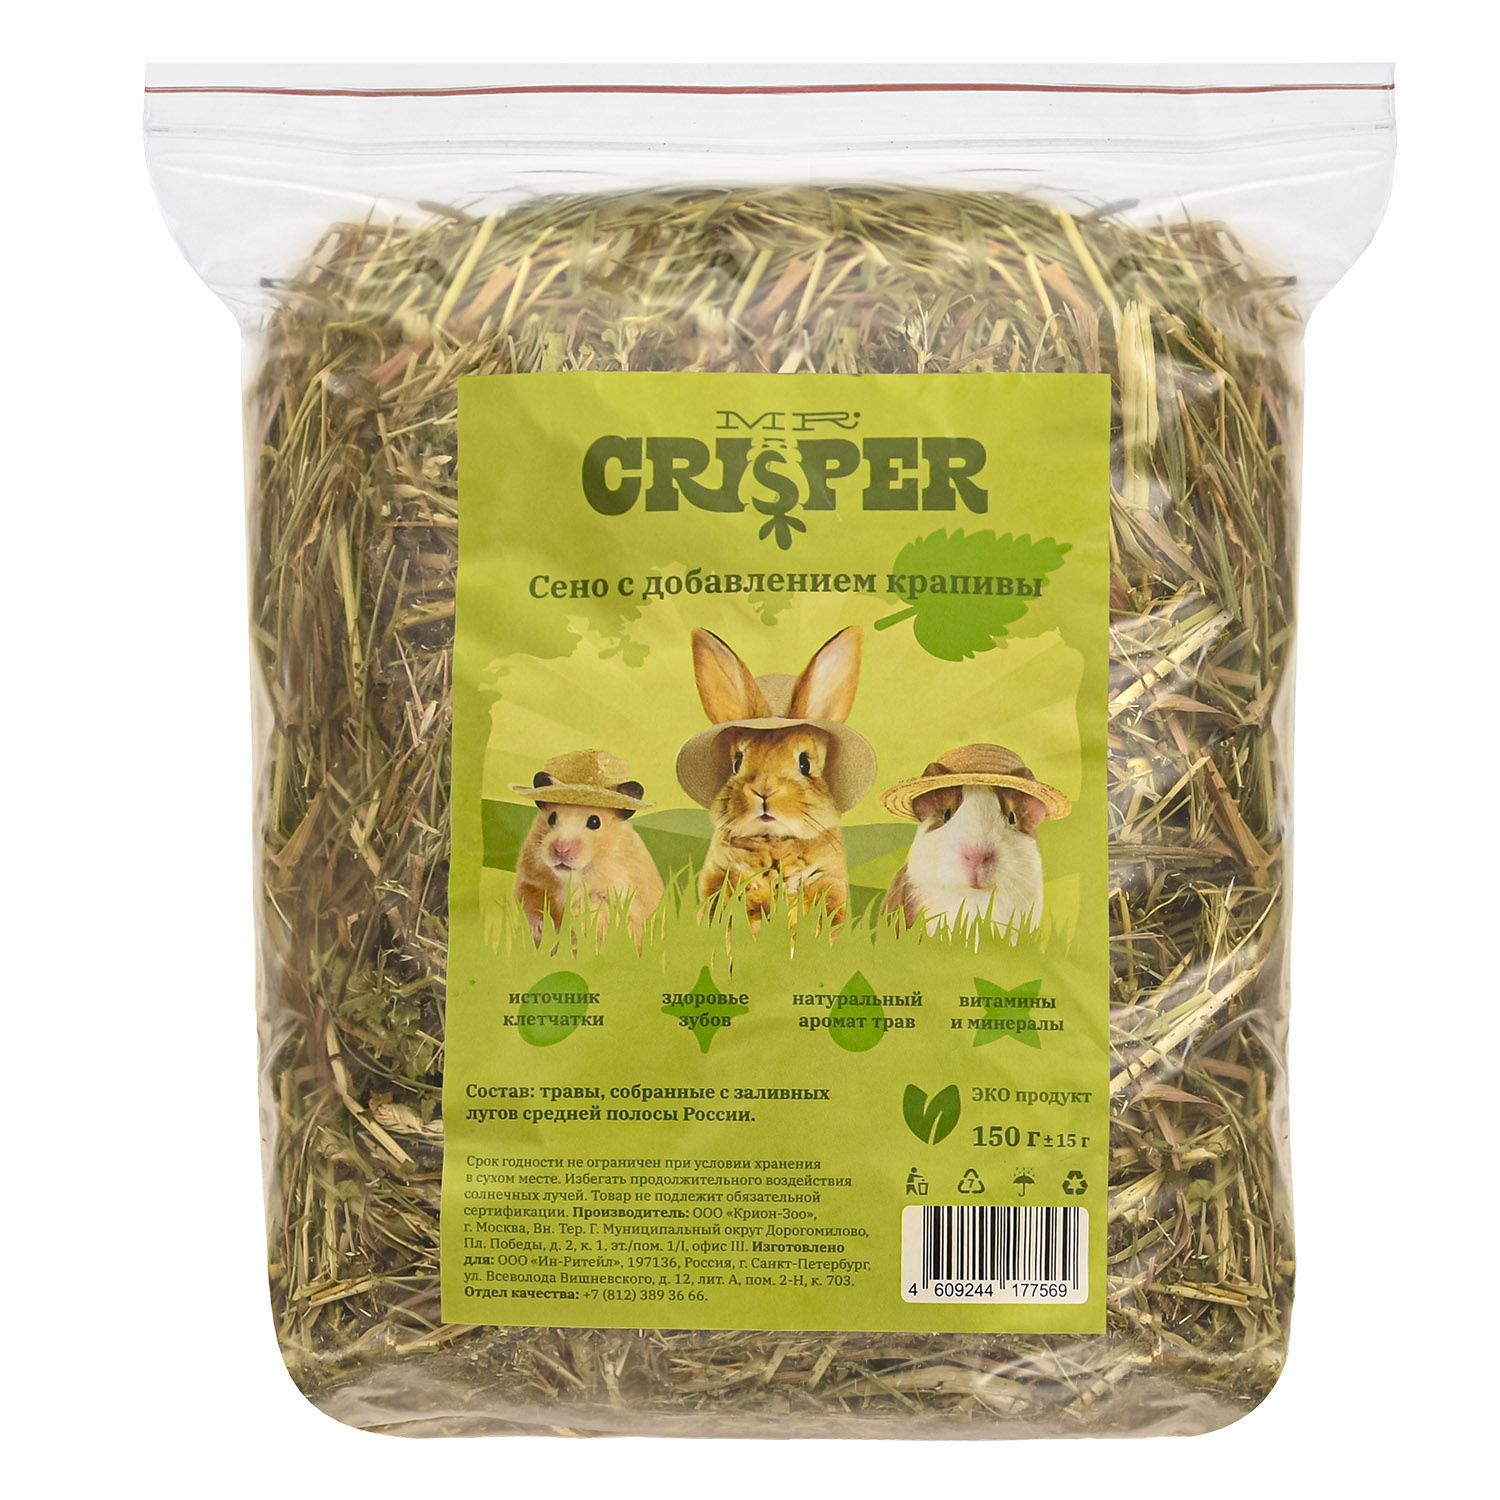 MR.Crisper сено с добавлением крапивы (500 г)